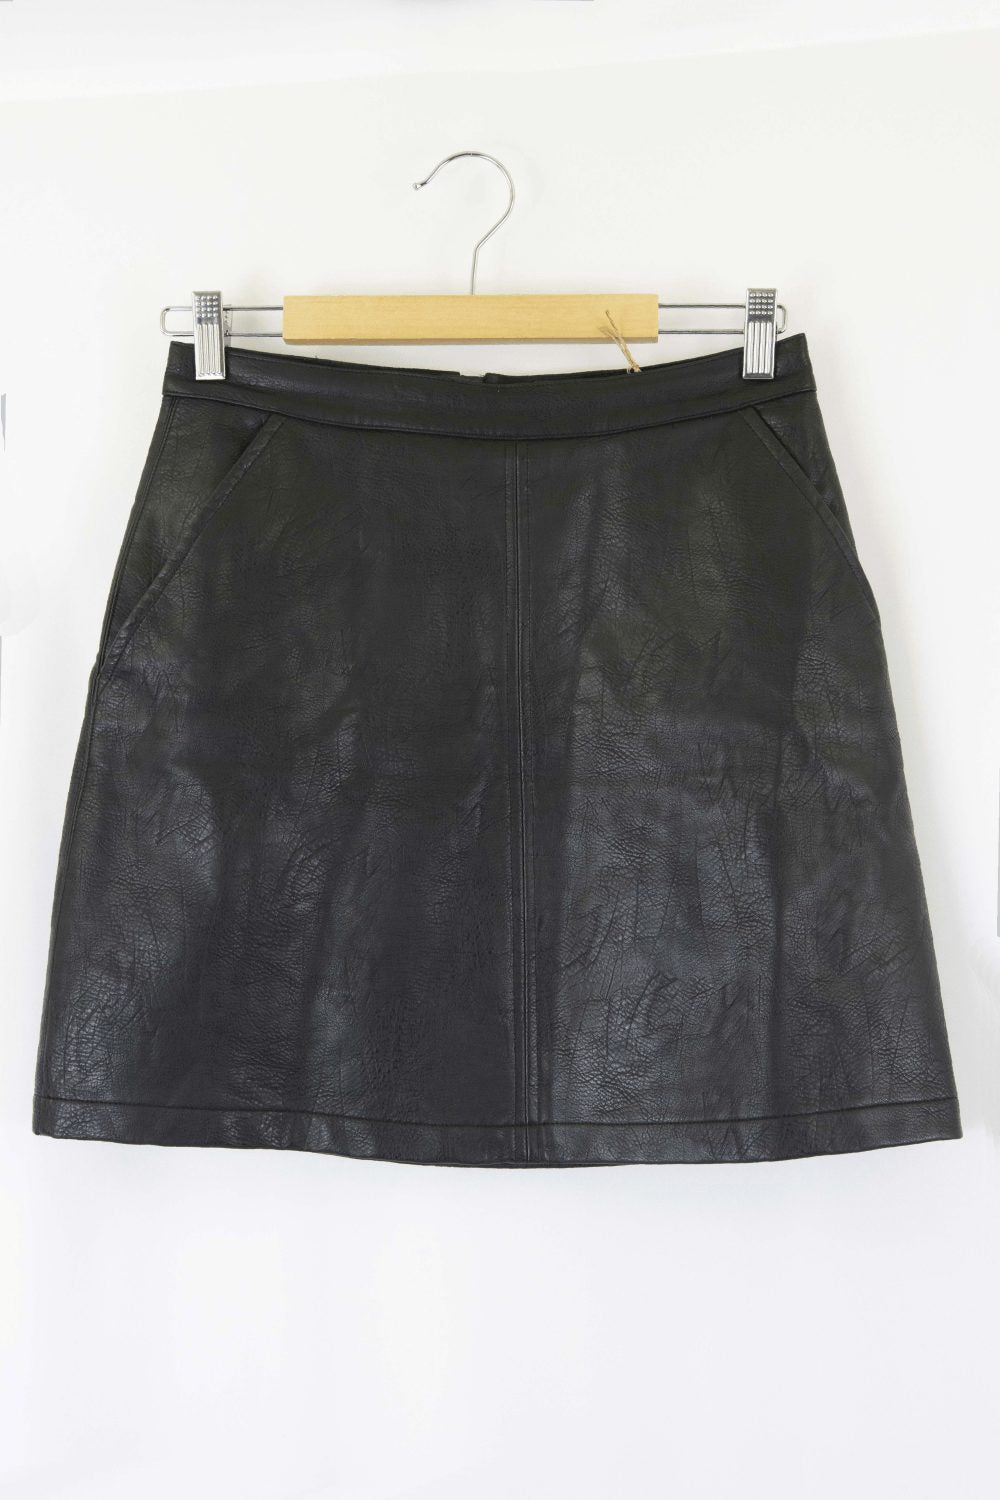 Sportsgirl Faux Leather Skirt XS